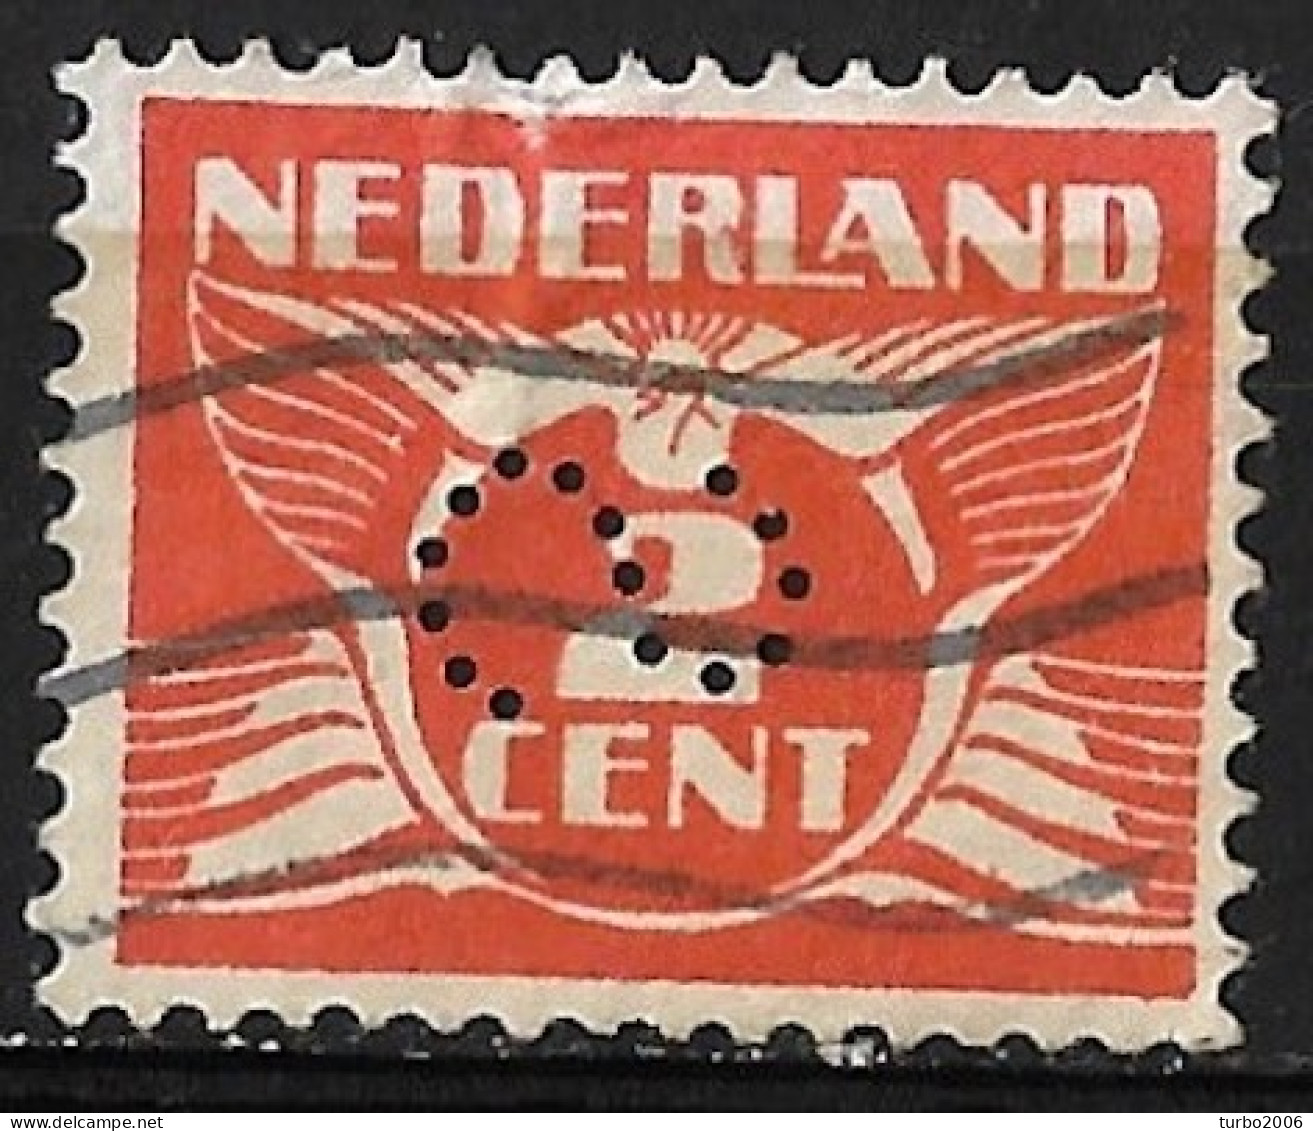 Perfin S (Haagse Kioskonderneming Segboer Te 's-Gravenhage) In 1924-1925 Vliegende Duif 2 Cent Oranje Zonder WM NVPH 145 - Perfins